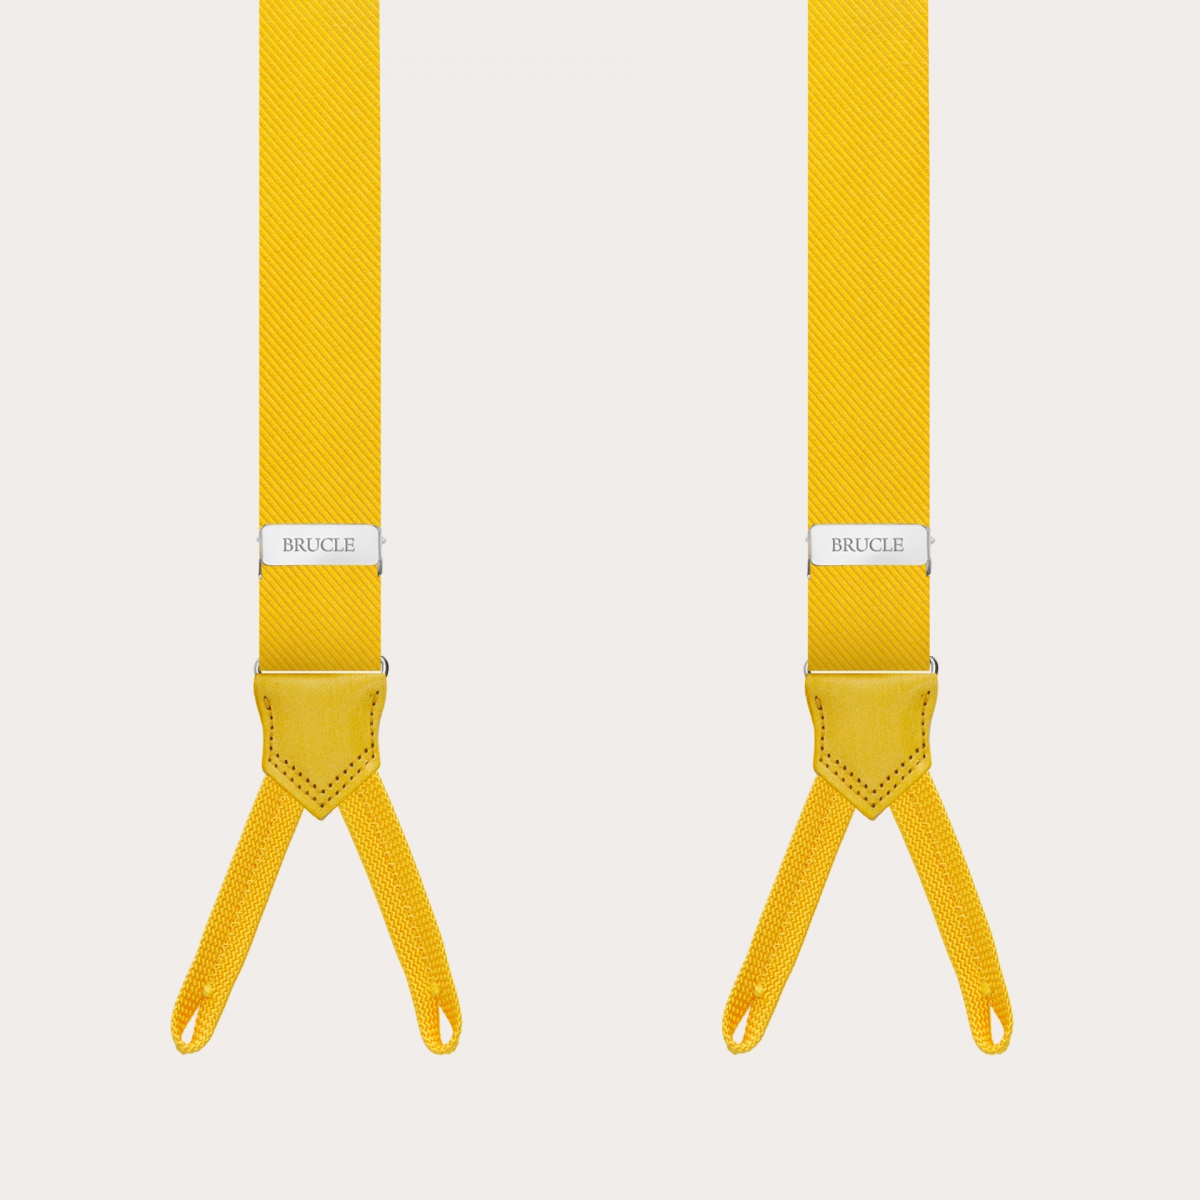 BRUCLE Bretelle gialle strette per bottoni in seta